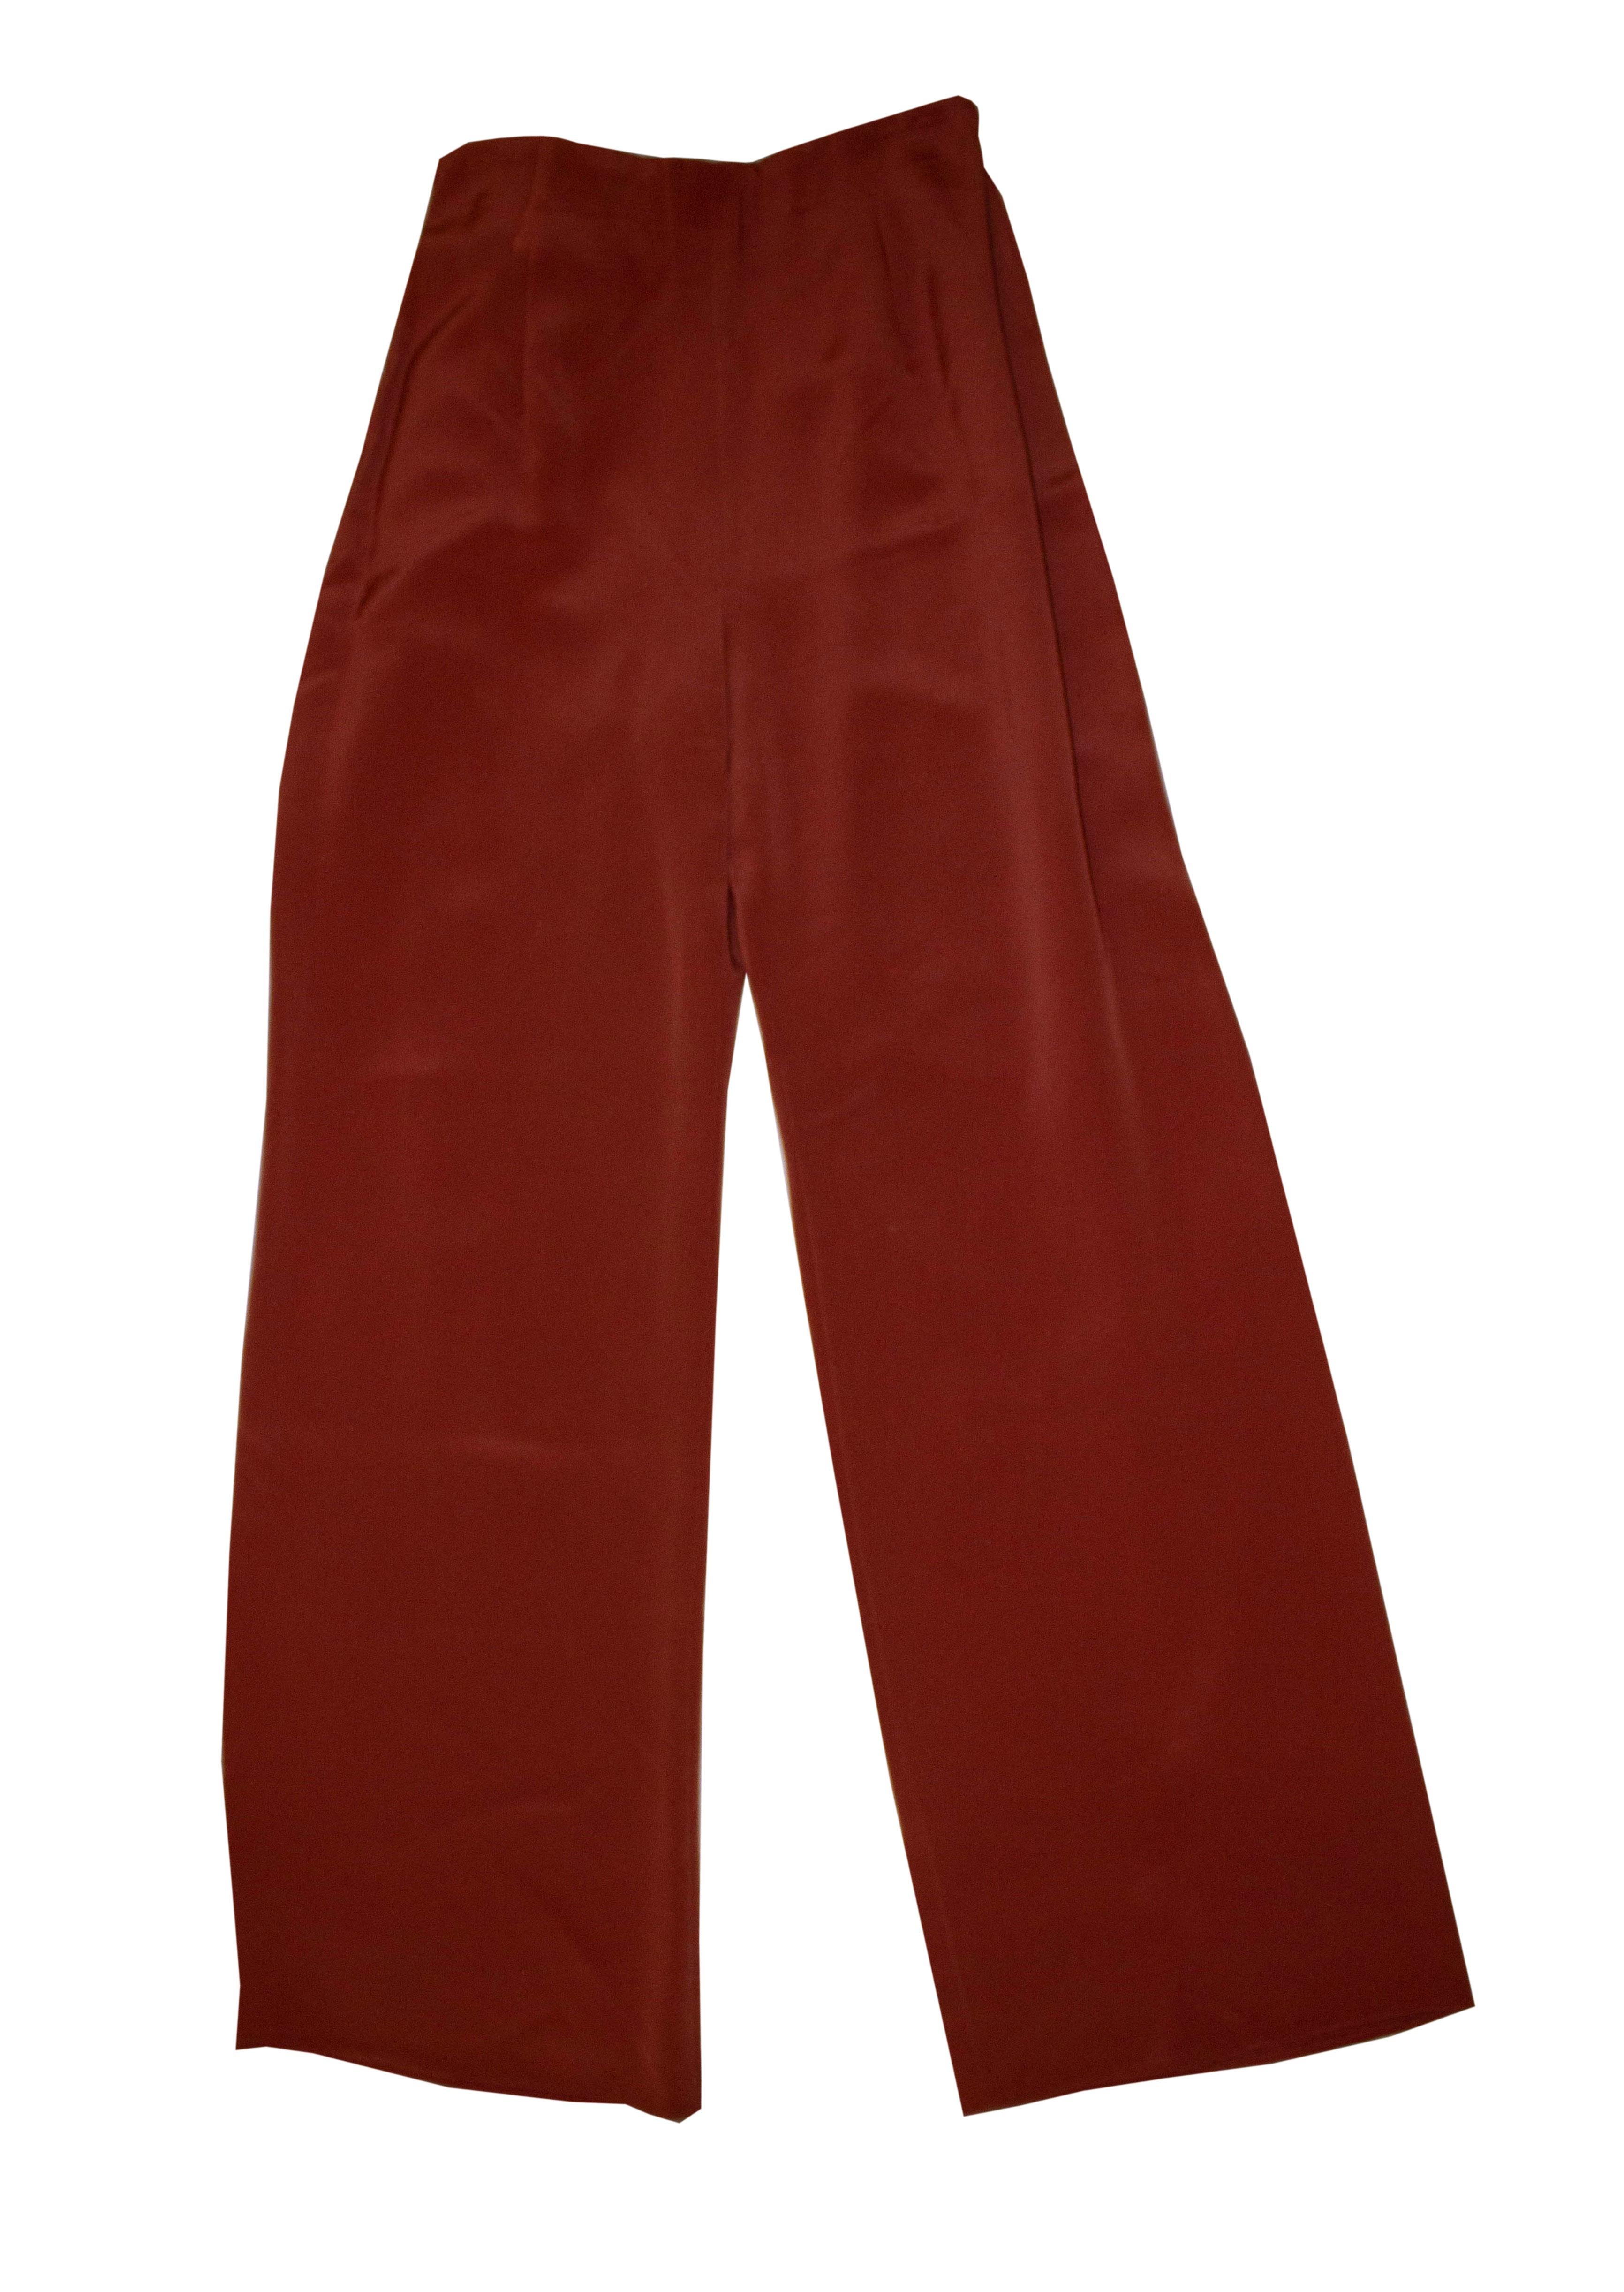 Robinson Valentine Evening Trouser Suit For Sale 2